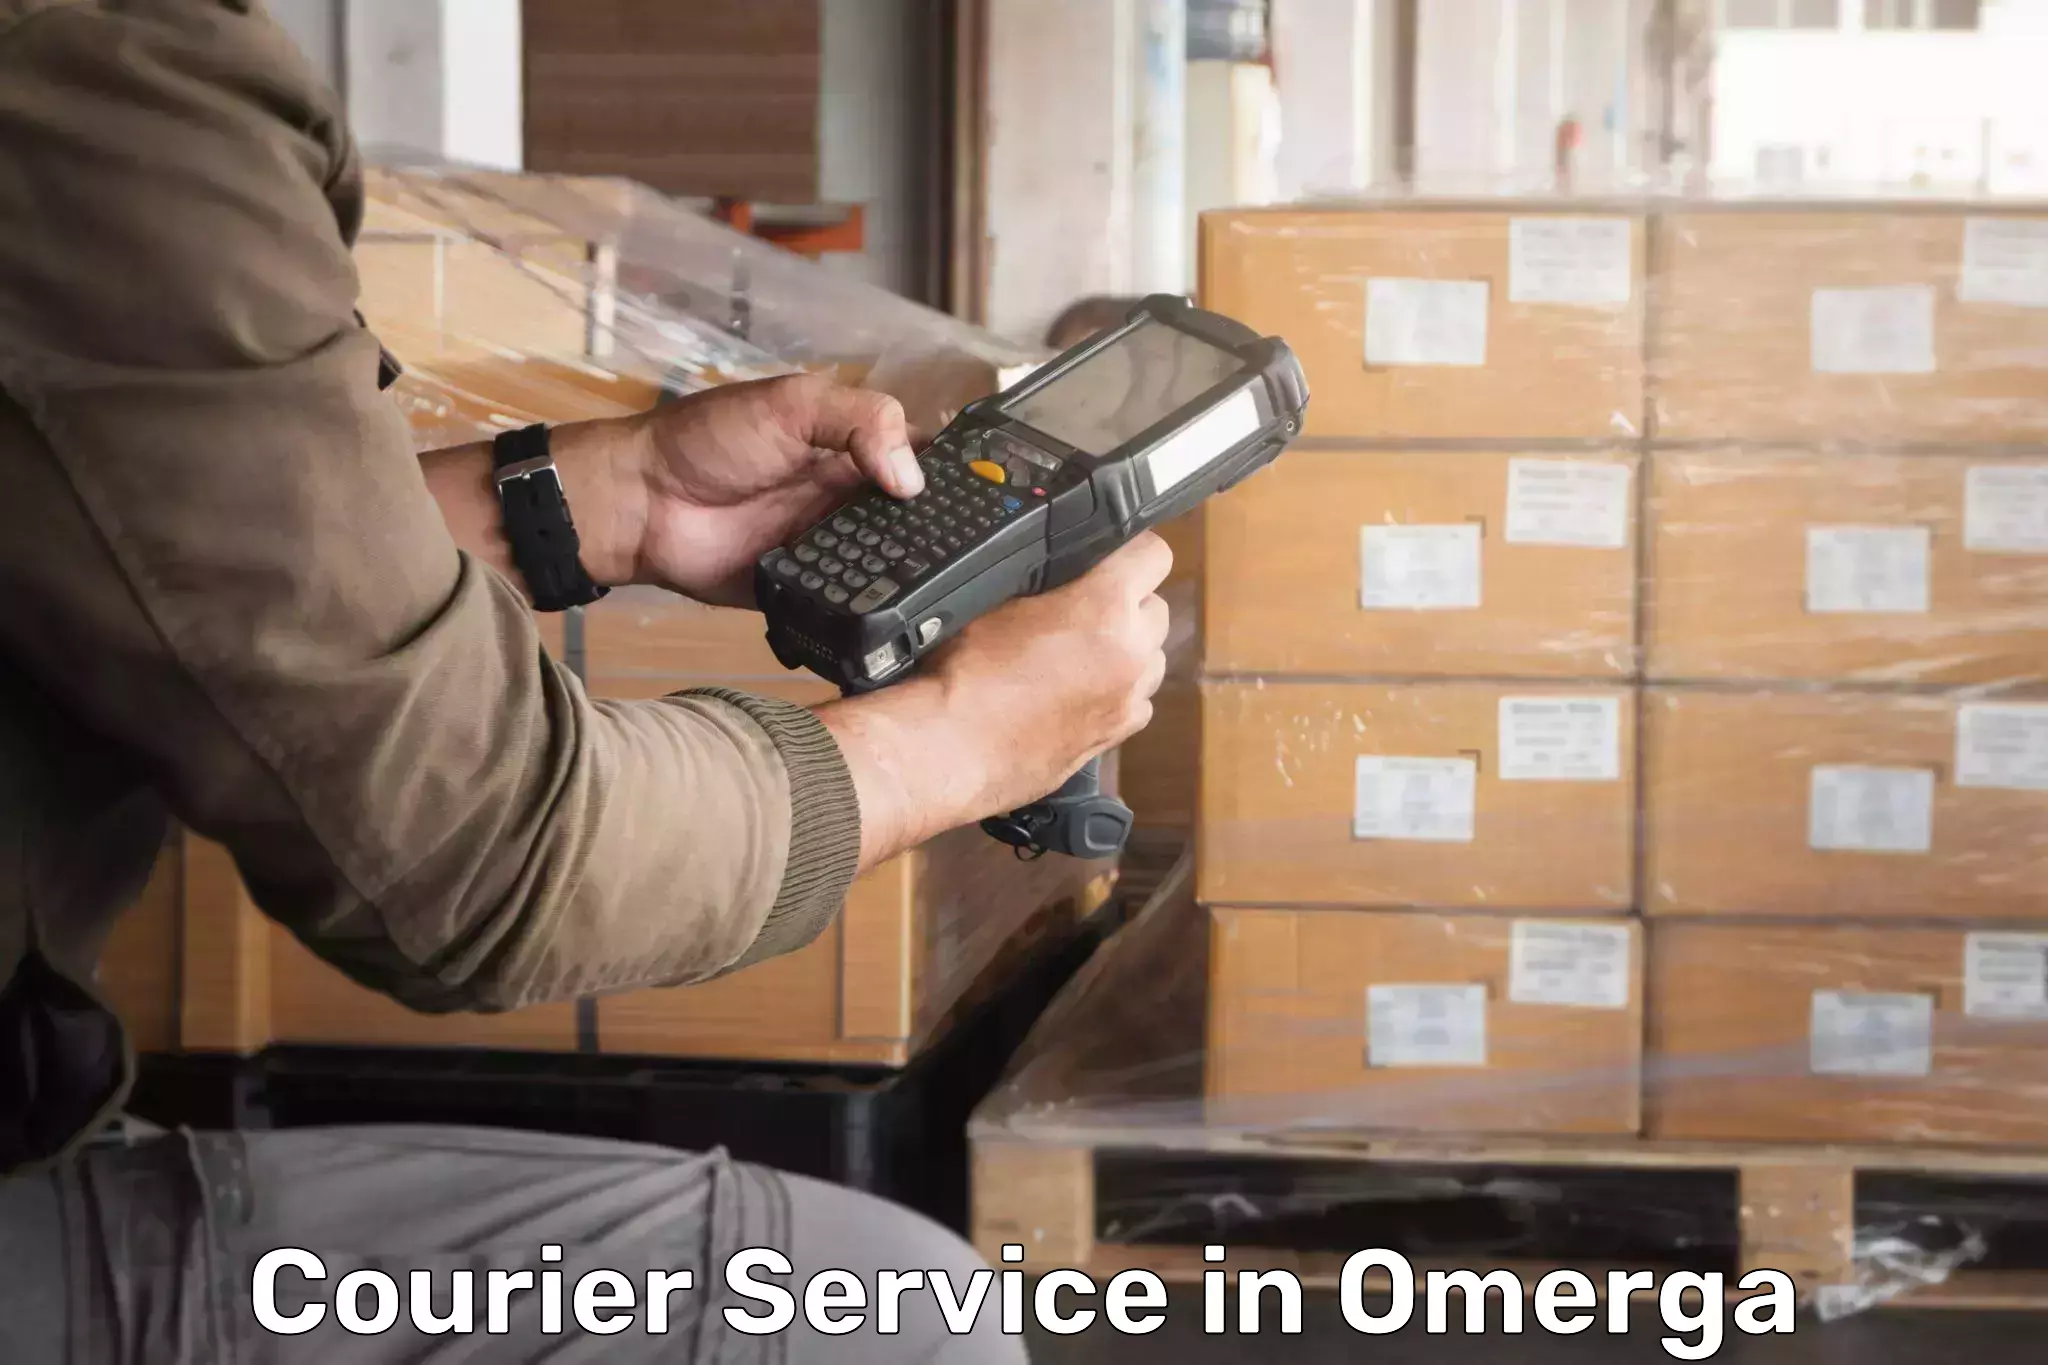 Urban courier service in Omerga